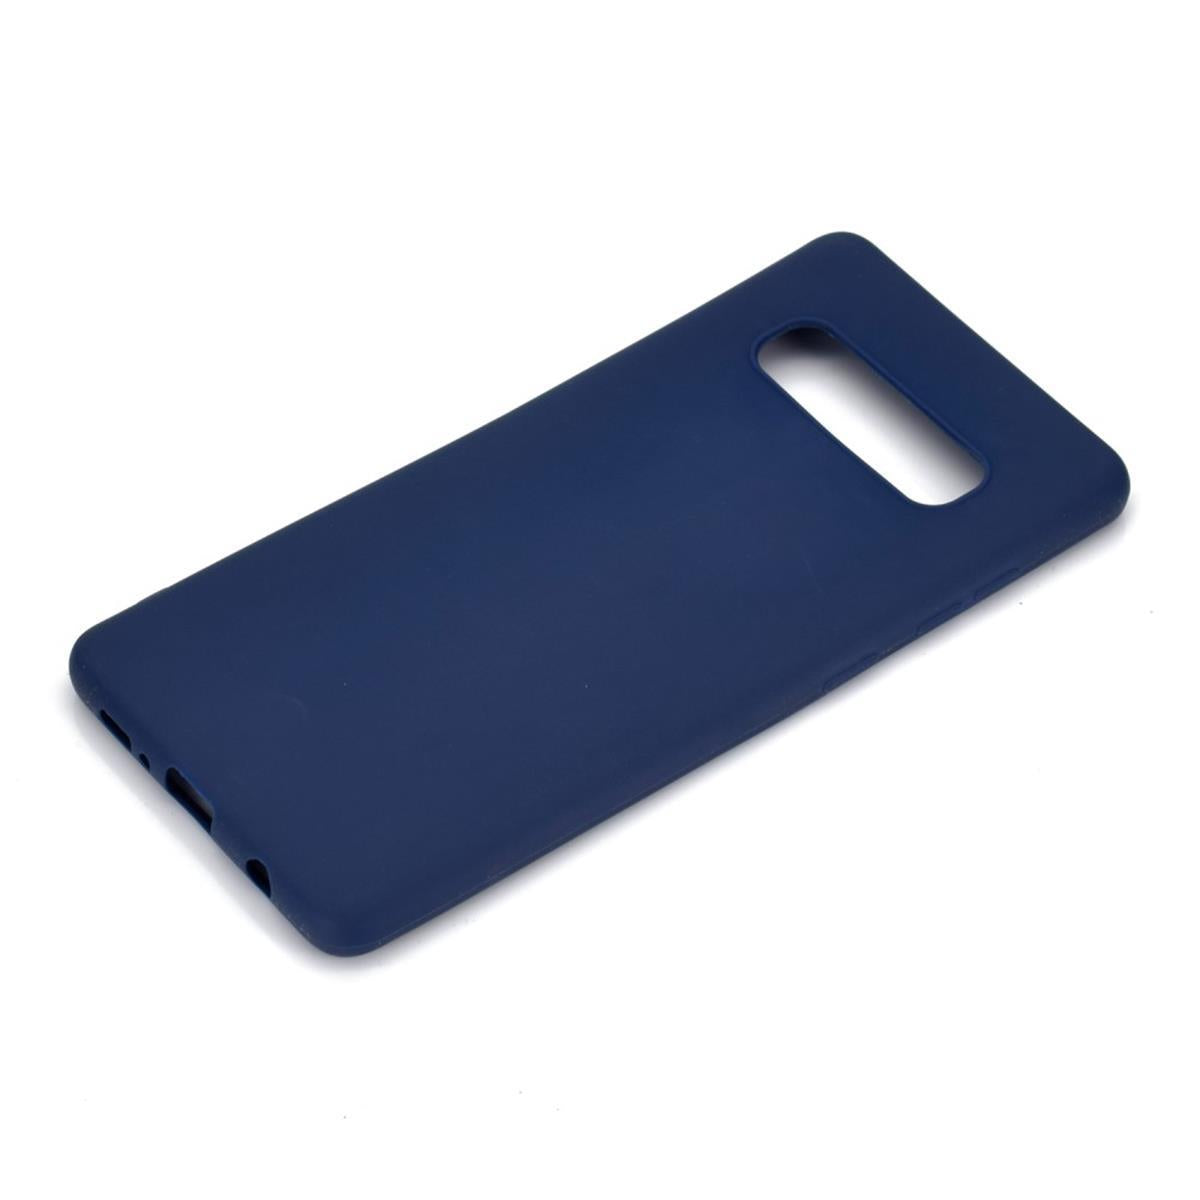 Hülle für Samsung Galaxy S10+ (Plus) Handyhülle Silikon Case Cover Matt Blau